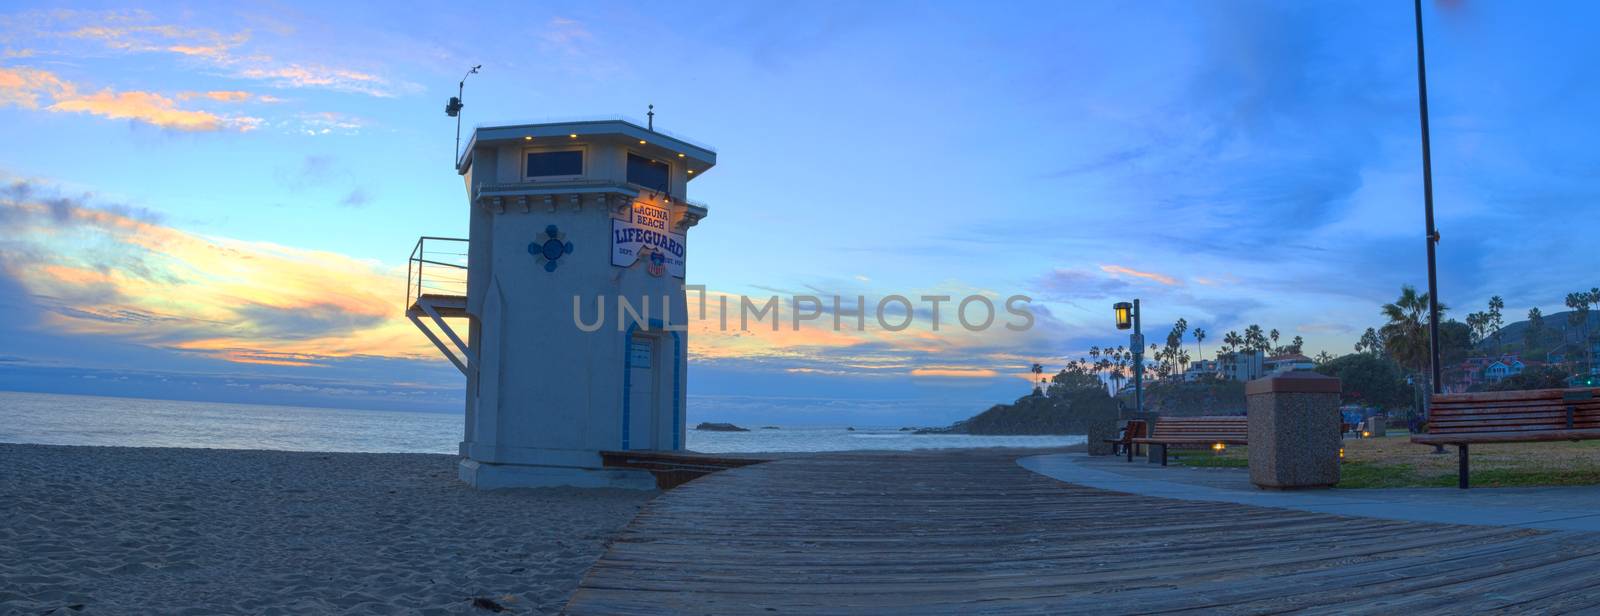 Lifeguard station on boardwalk at Main beach at sunset by steffstarr